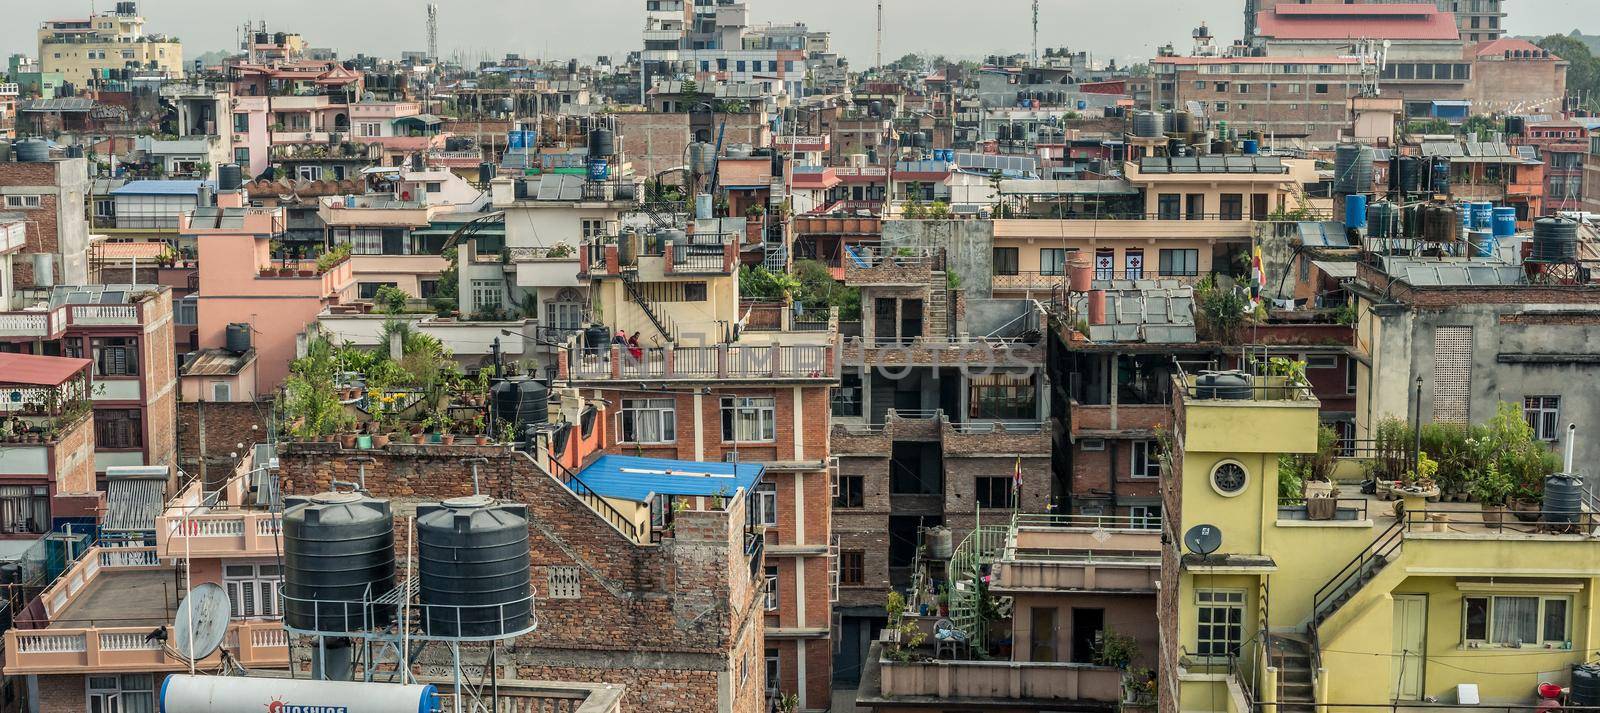 View on multistorey houses in Kathmandu, Nepal by tan4ikk1